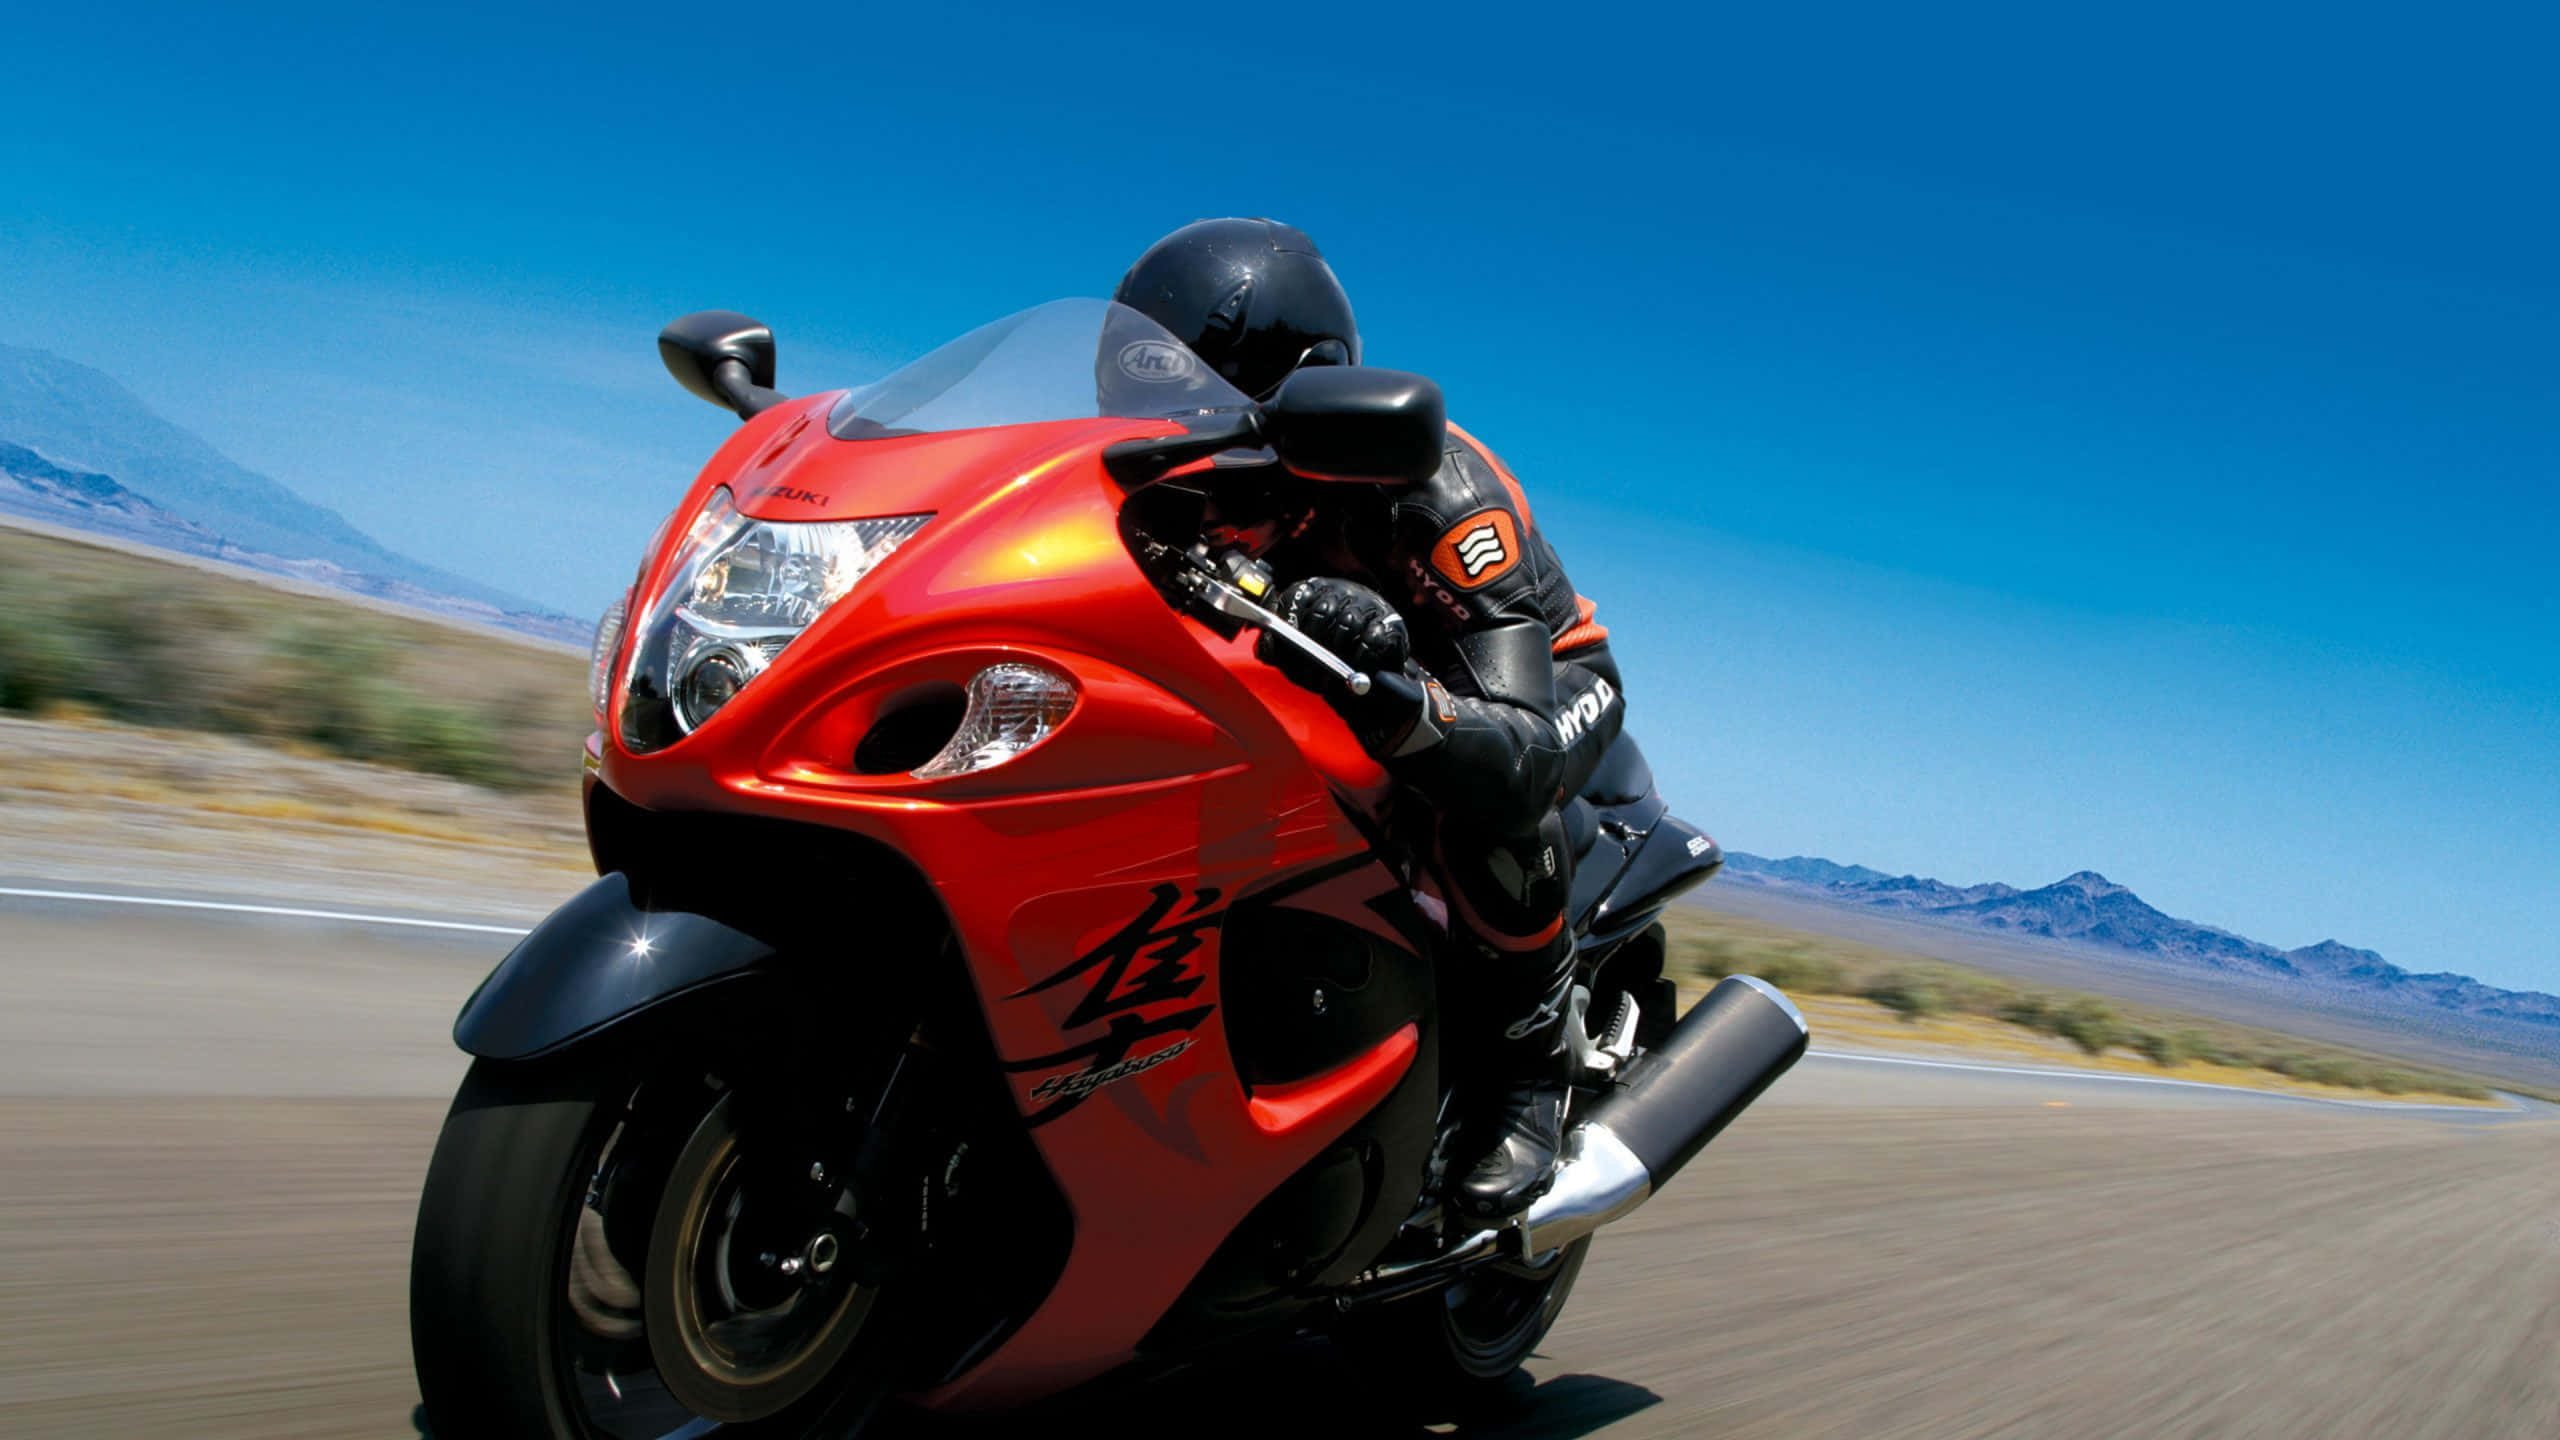 Caption: Suzuki Motorcycle - Experience The Rush Of Speed Wallpaper